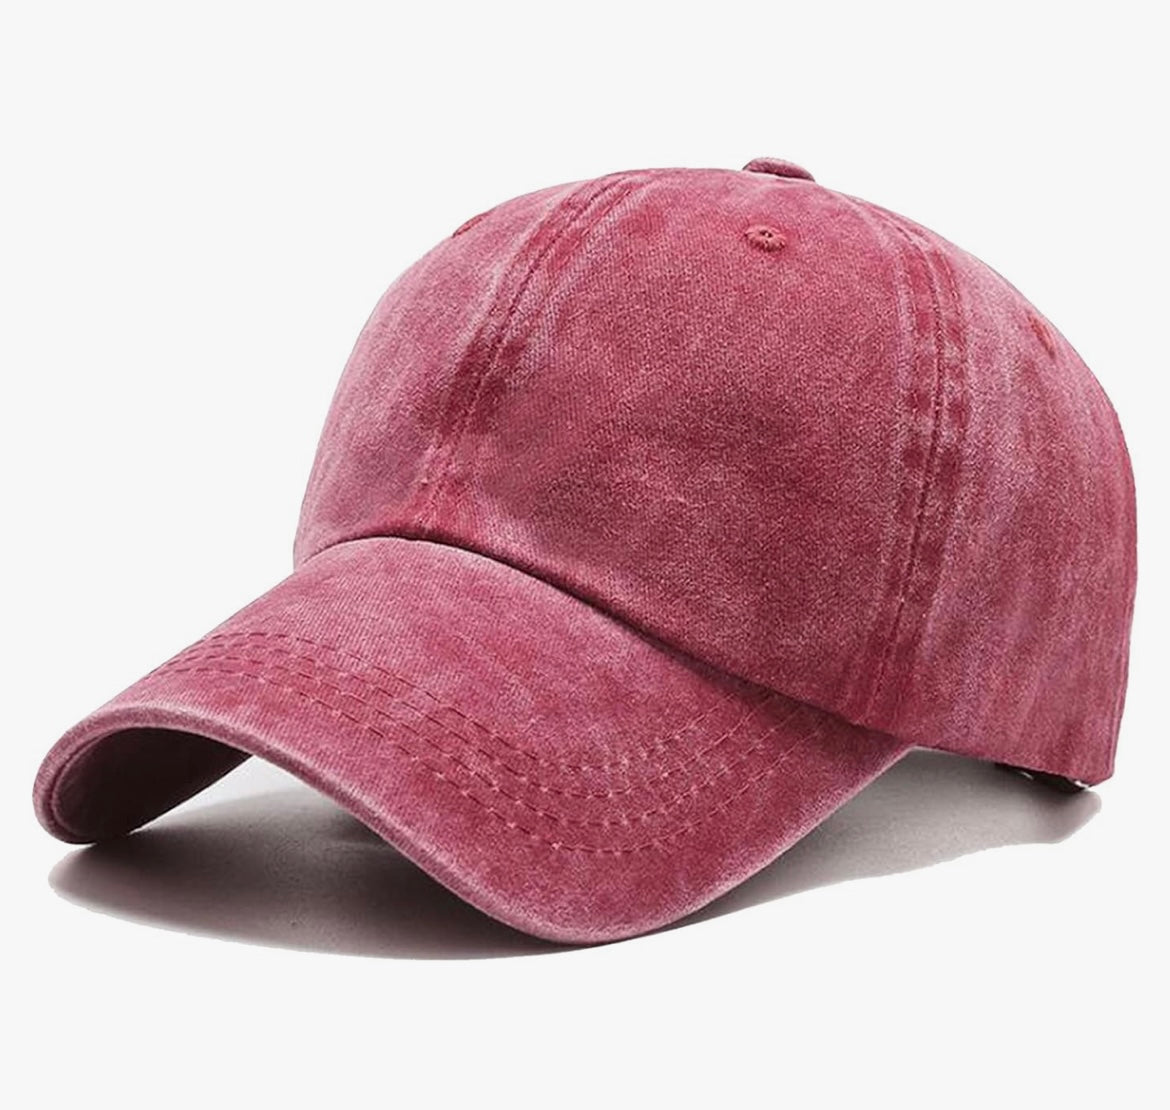 DESIGN YOUR OWN-Baseball cap